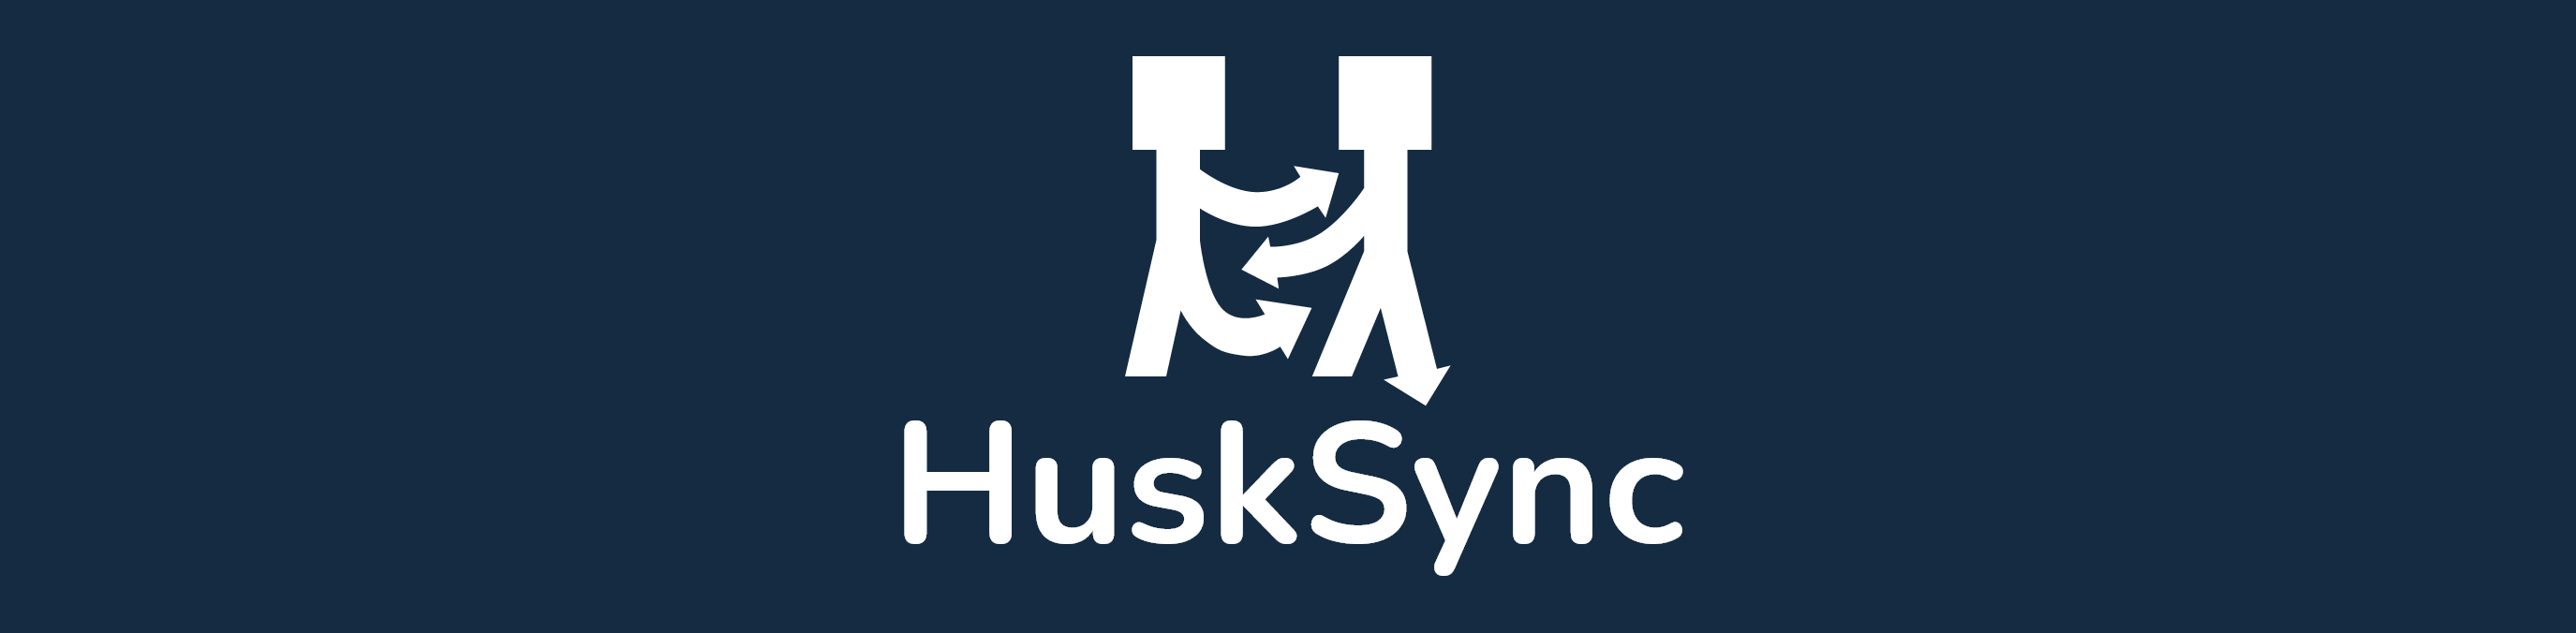 HuskSync Banner